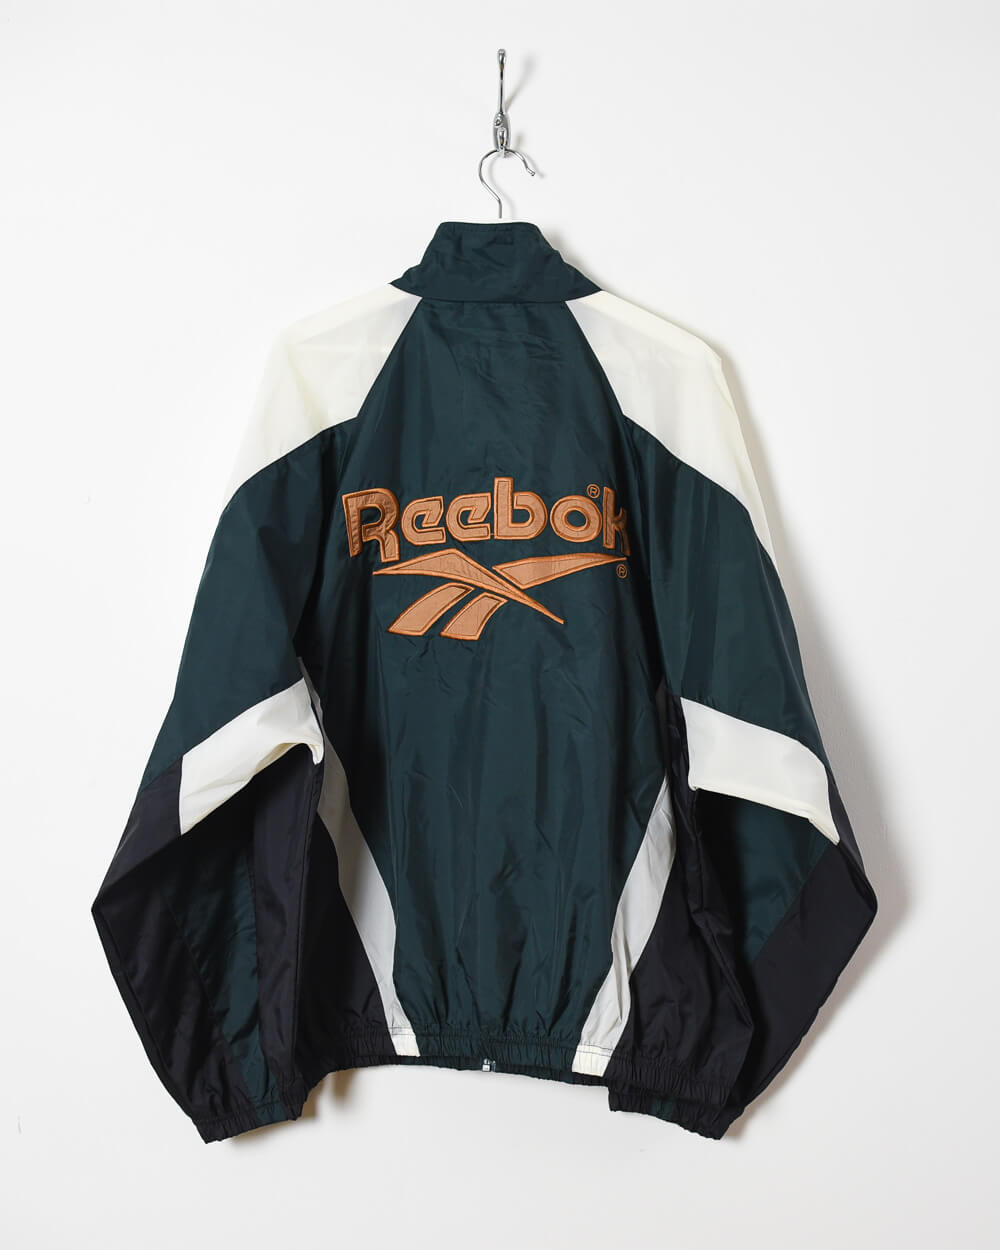 Reebok Windbreaker Jacket - Large - Domno Vintage 90s, 80s, 00s Retro and Vintage Clothing 